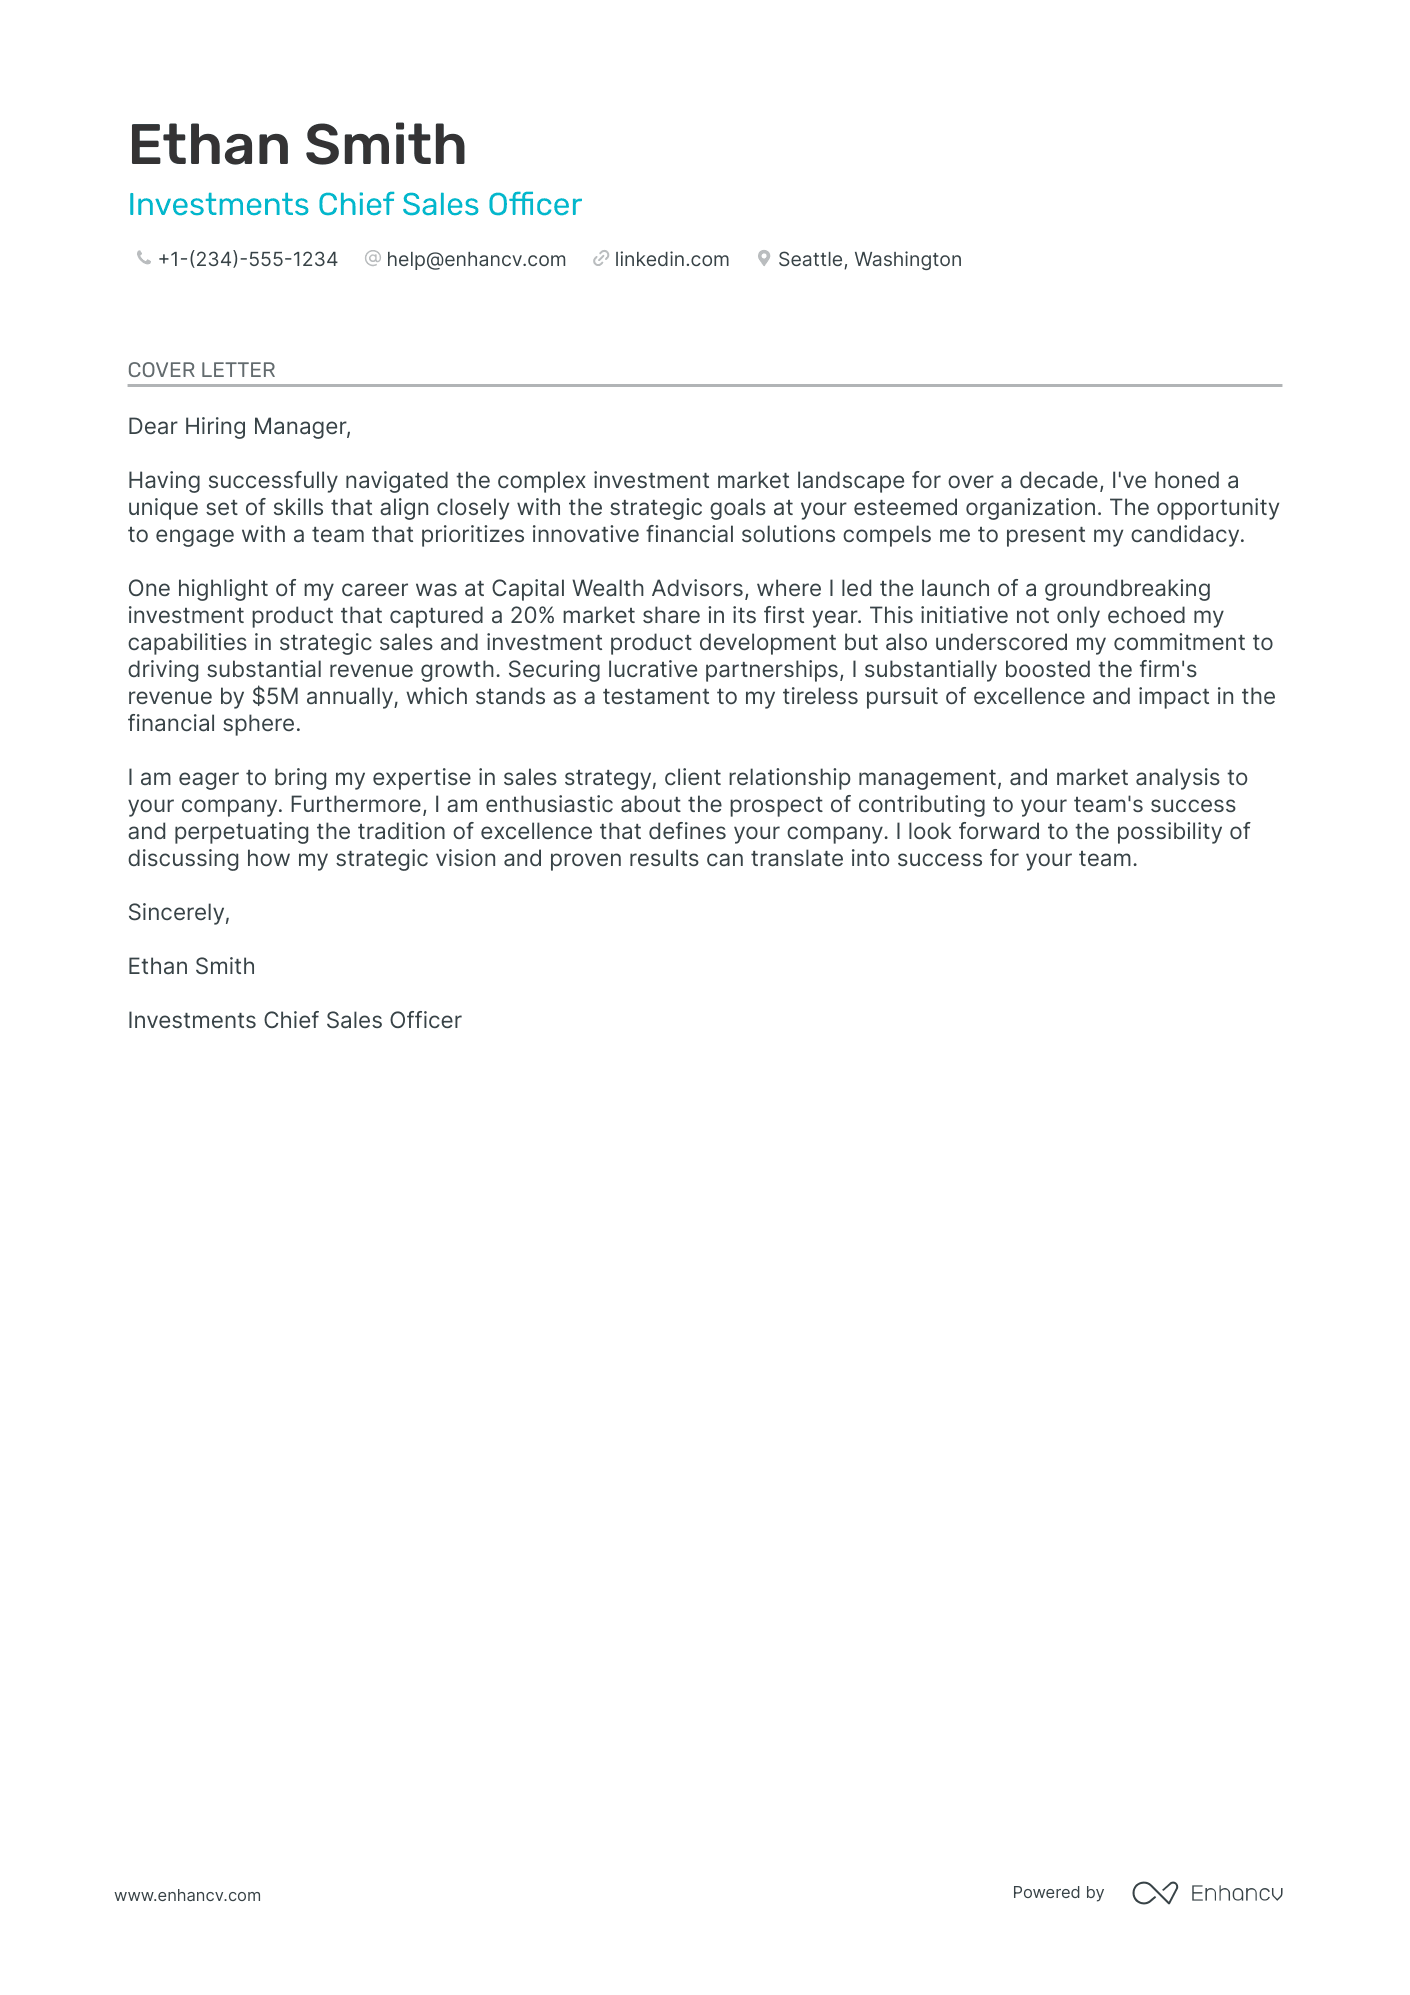 Sales Officer cover letter